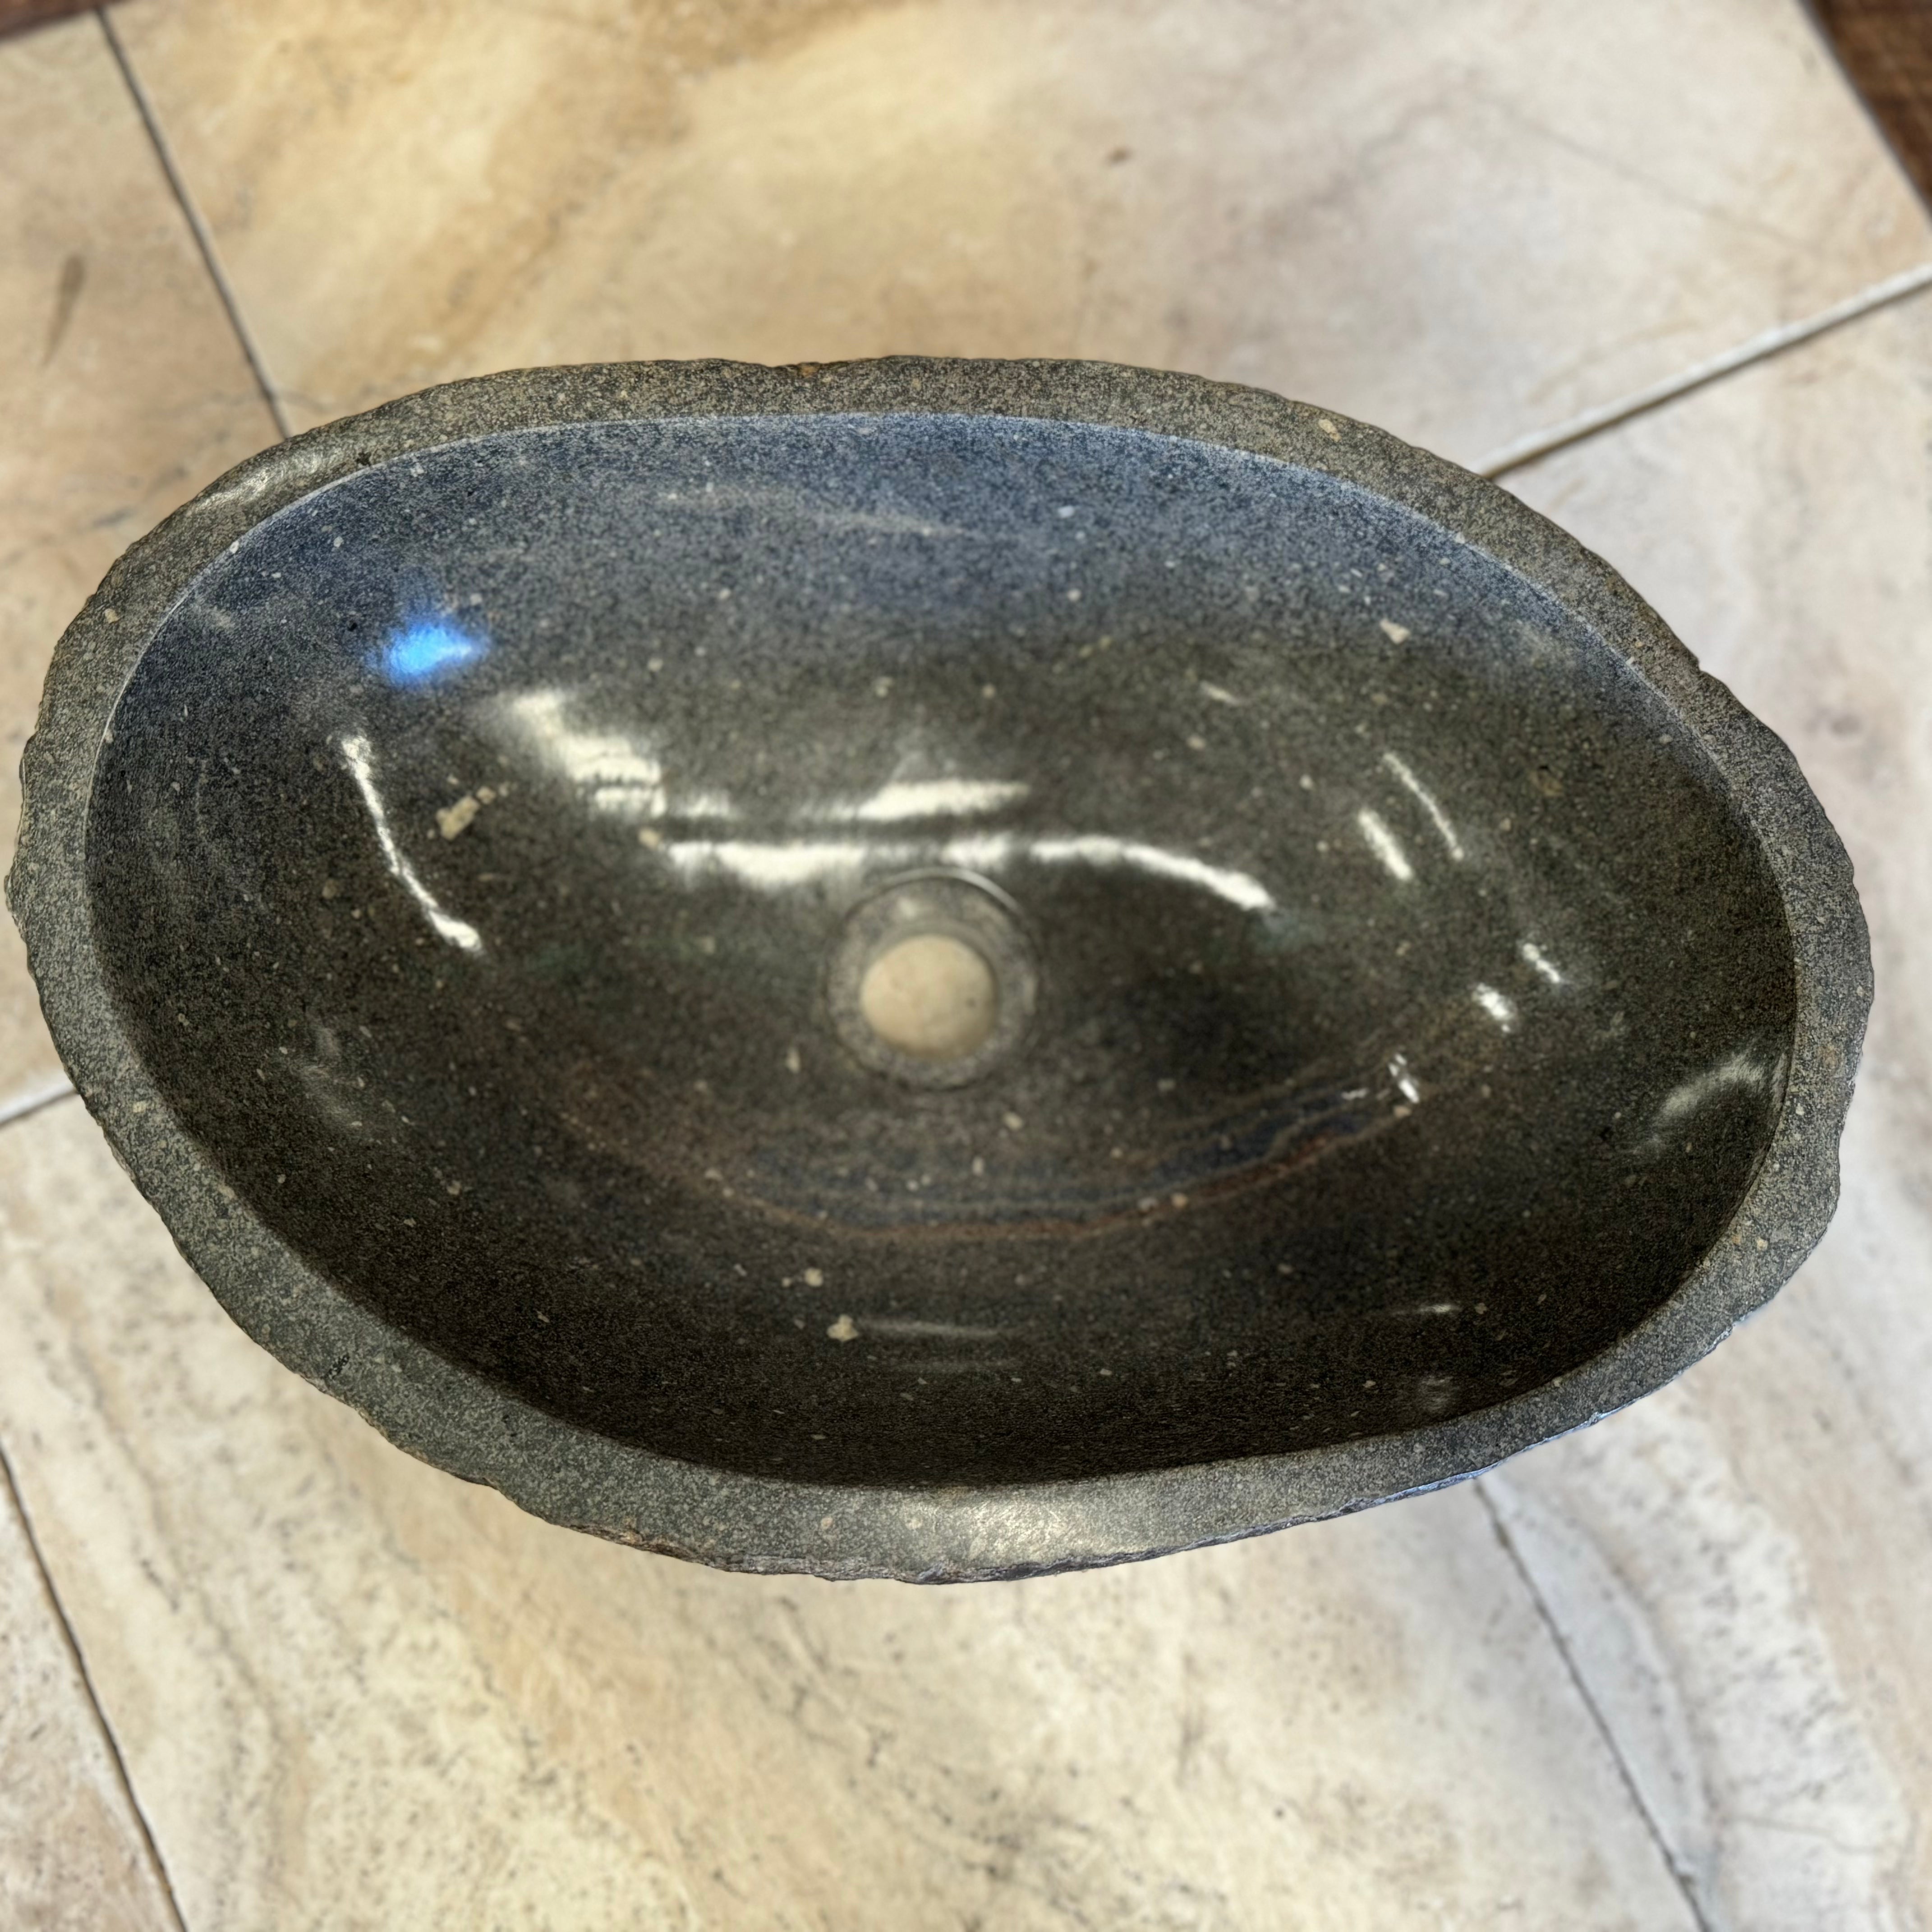 Handmade Natural Oval River Stone Bathroom Basin - RM2306110